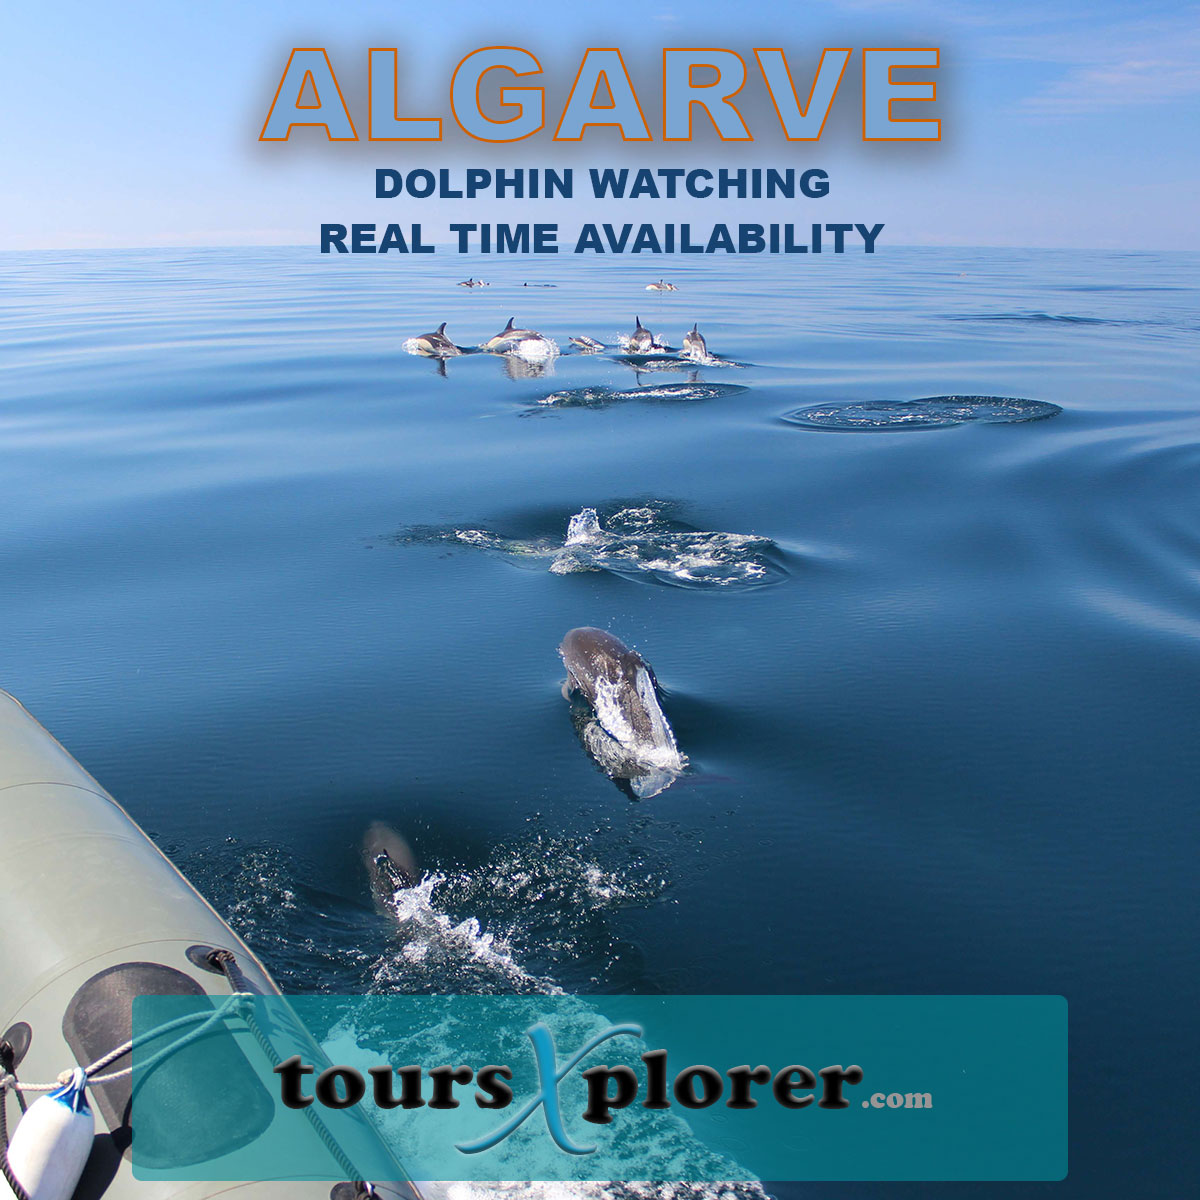 Dolphin Watching Algarve

#DolphinWatching #Algarve #Portugal #ToursXplorer #WildlifeWatching #NatureLovers #Travel #Vacation #Adventure #OceanLife #MarineLife #Sightseeing #TouristAttraction #FamilyFun #GroupActivity #BoatTour #SeaLife #ExploreTheWorld

toursxplorer.com/dolphin-watchi…